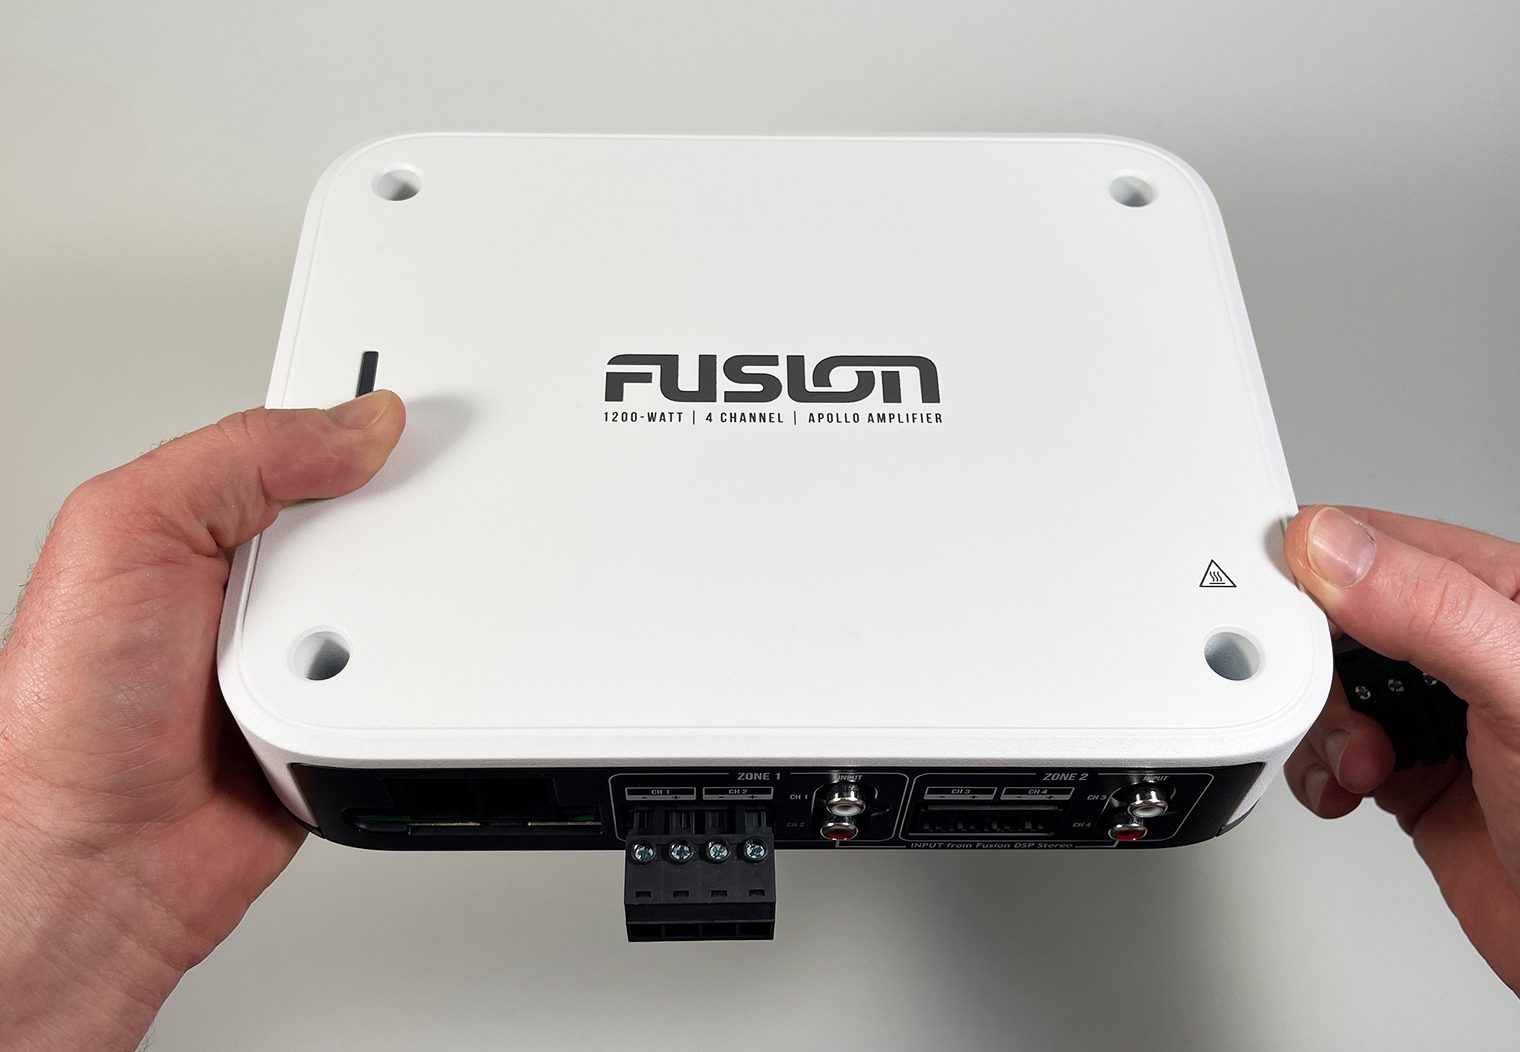 Fusion Apollo MS-AP41200 speaker terminal plugged into the amplifier